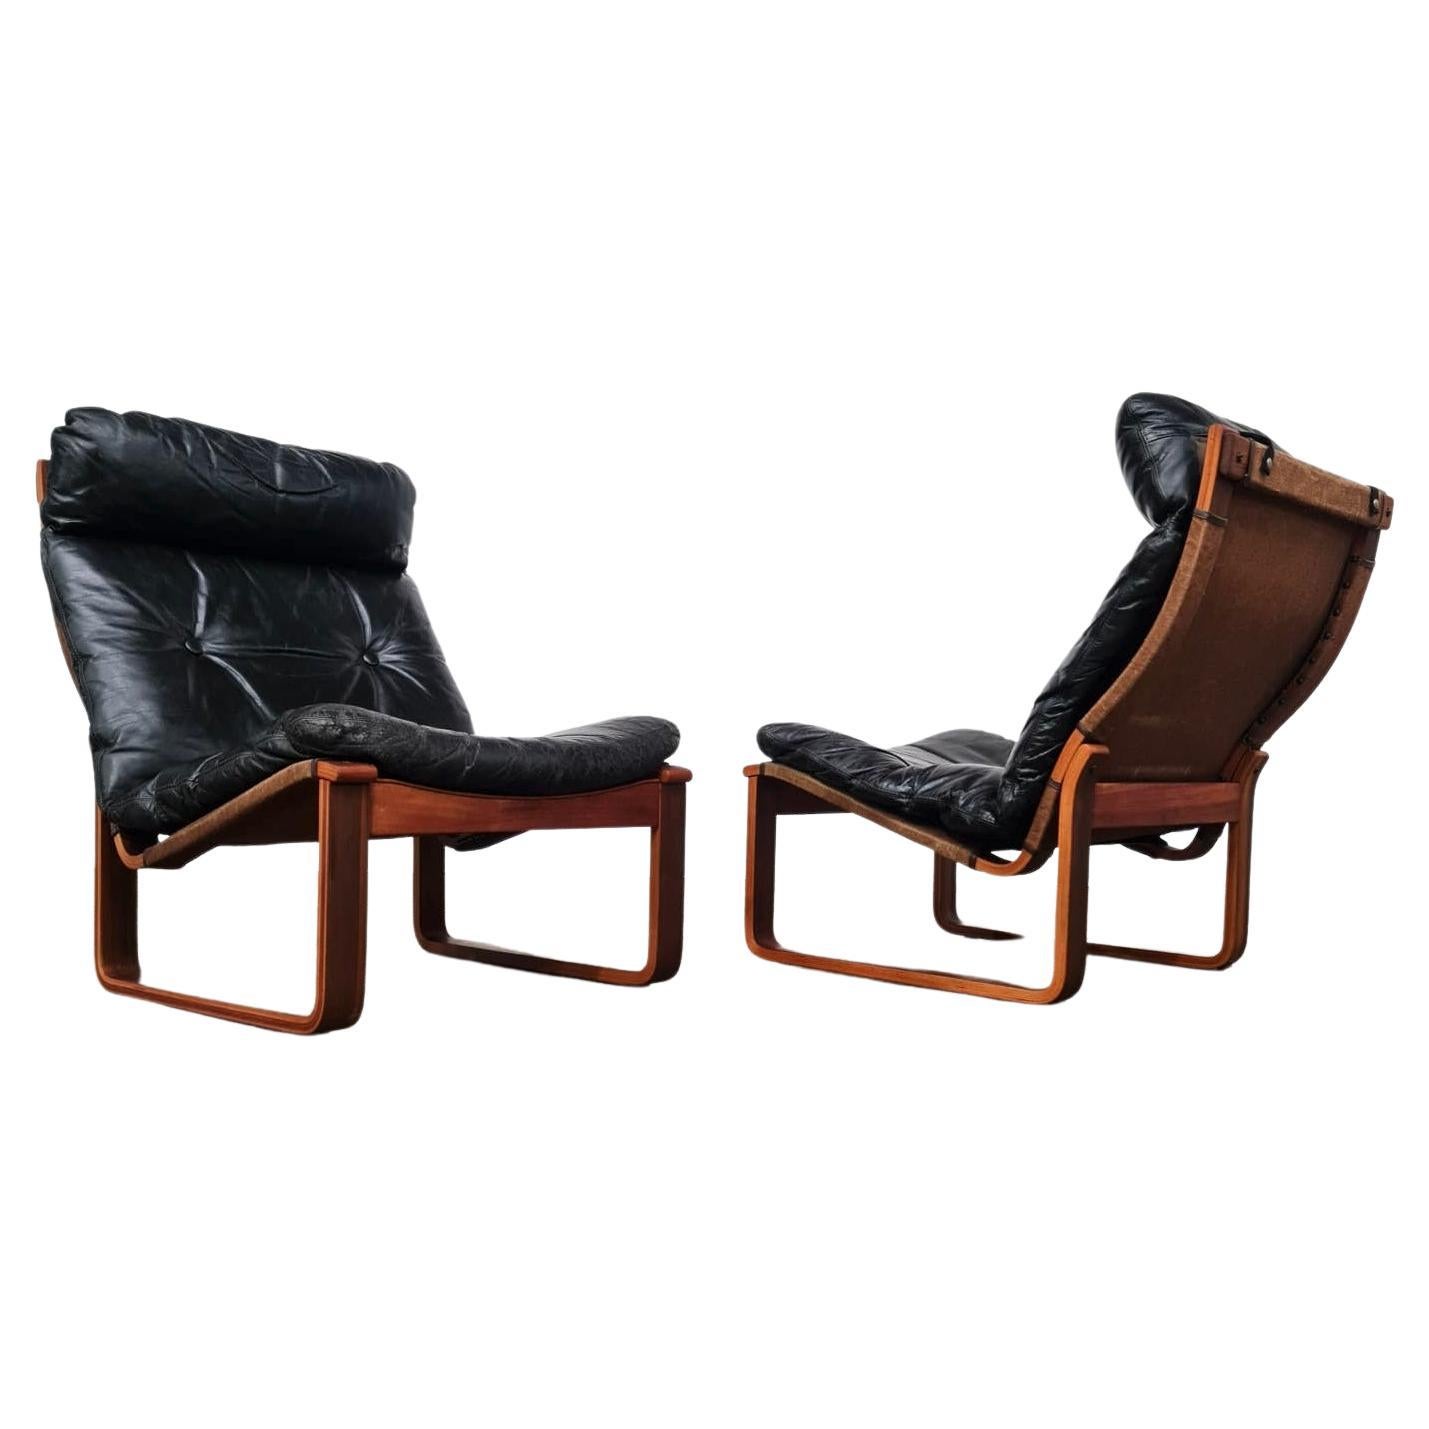 Pair of Tessa Furniture T8 Mid-Century Chairs 